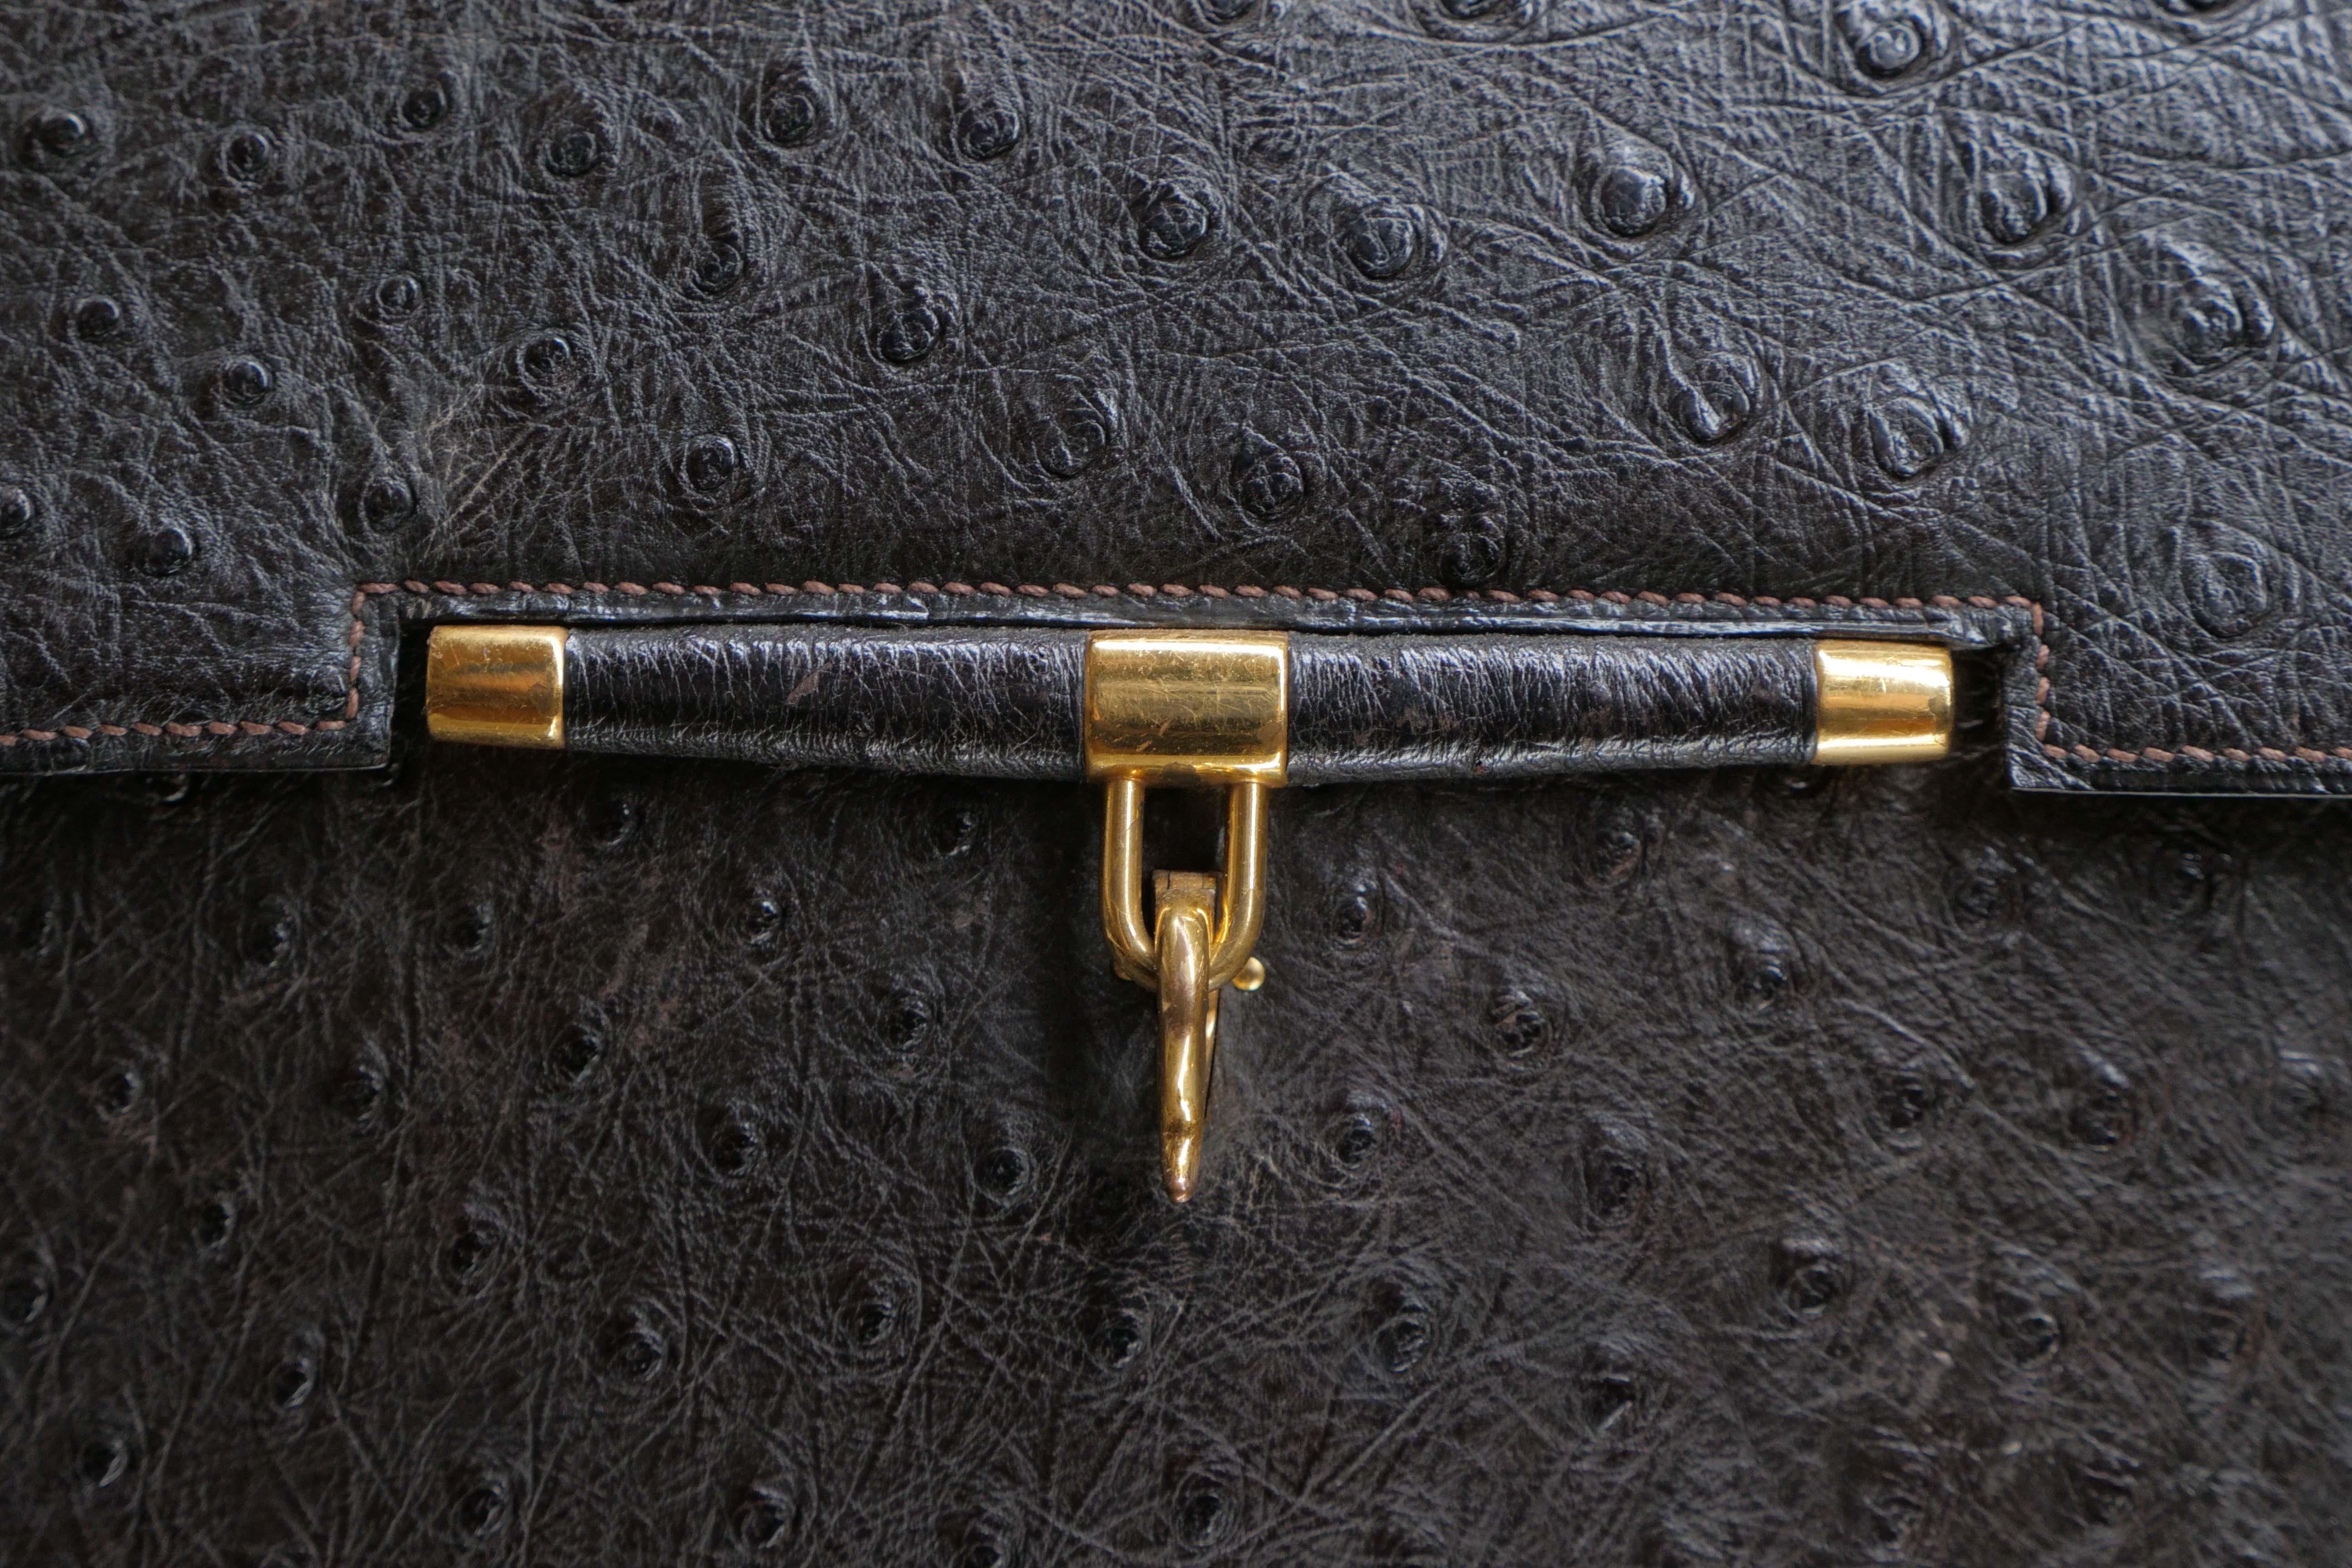 Dark Brown, Ostrich, Hermes Flap Handle Bag w/ Gold Hardware and Hook Closure.